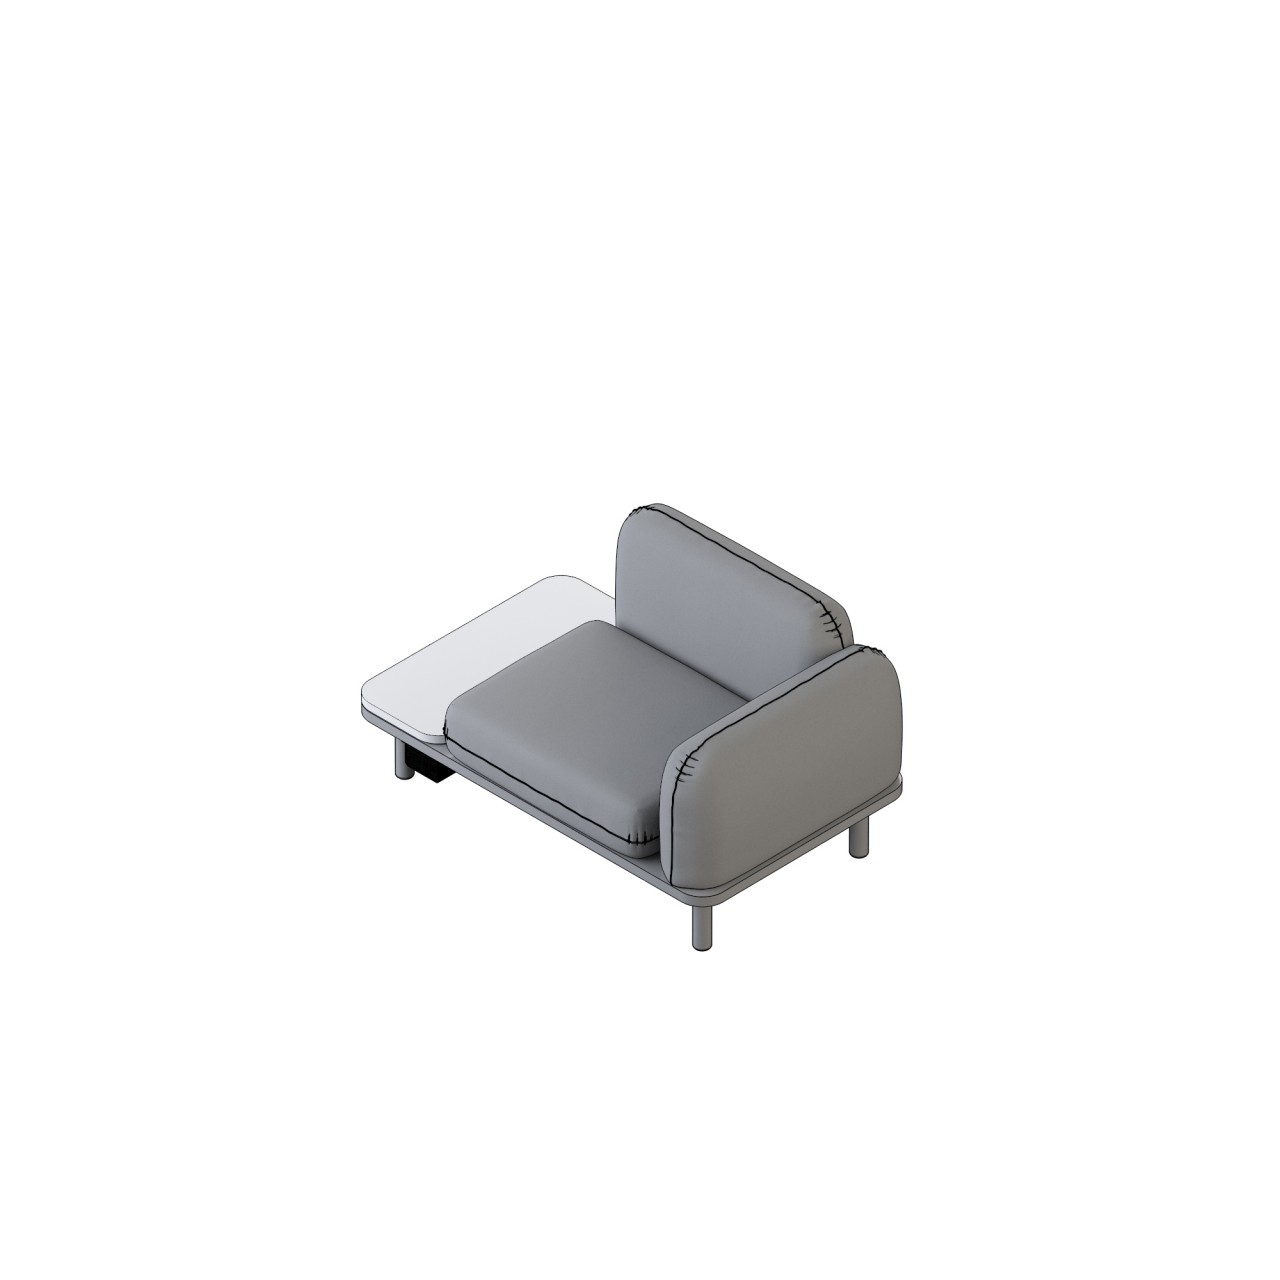 soft - 24006L
COM 6.25
(arms 1.25, back 1.5, base 1.5, seat, 2.5)